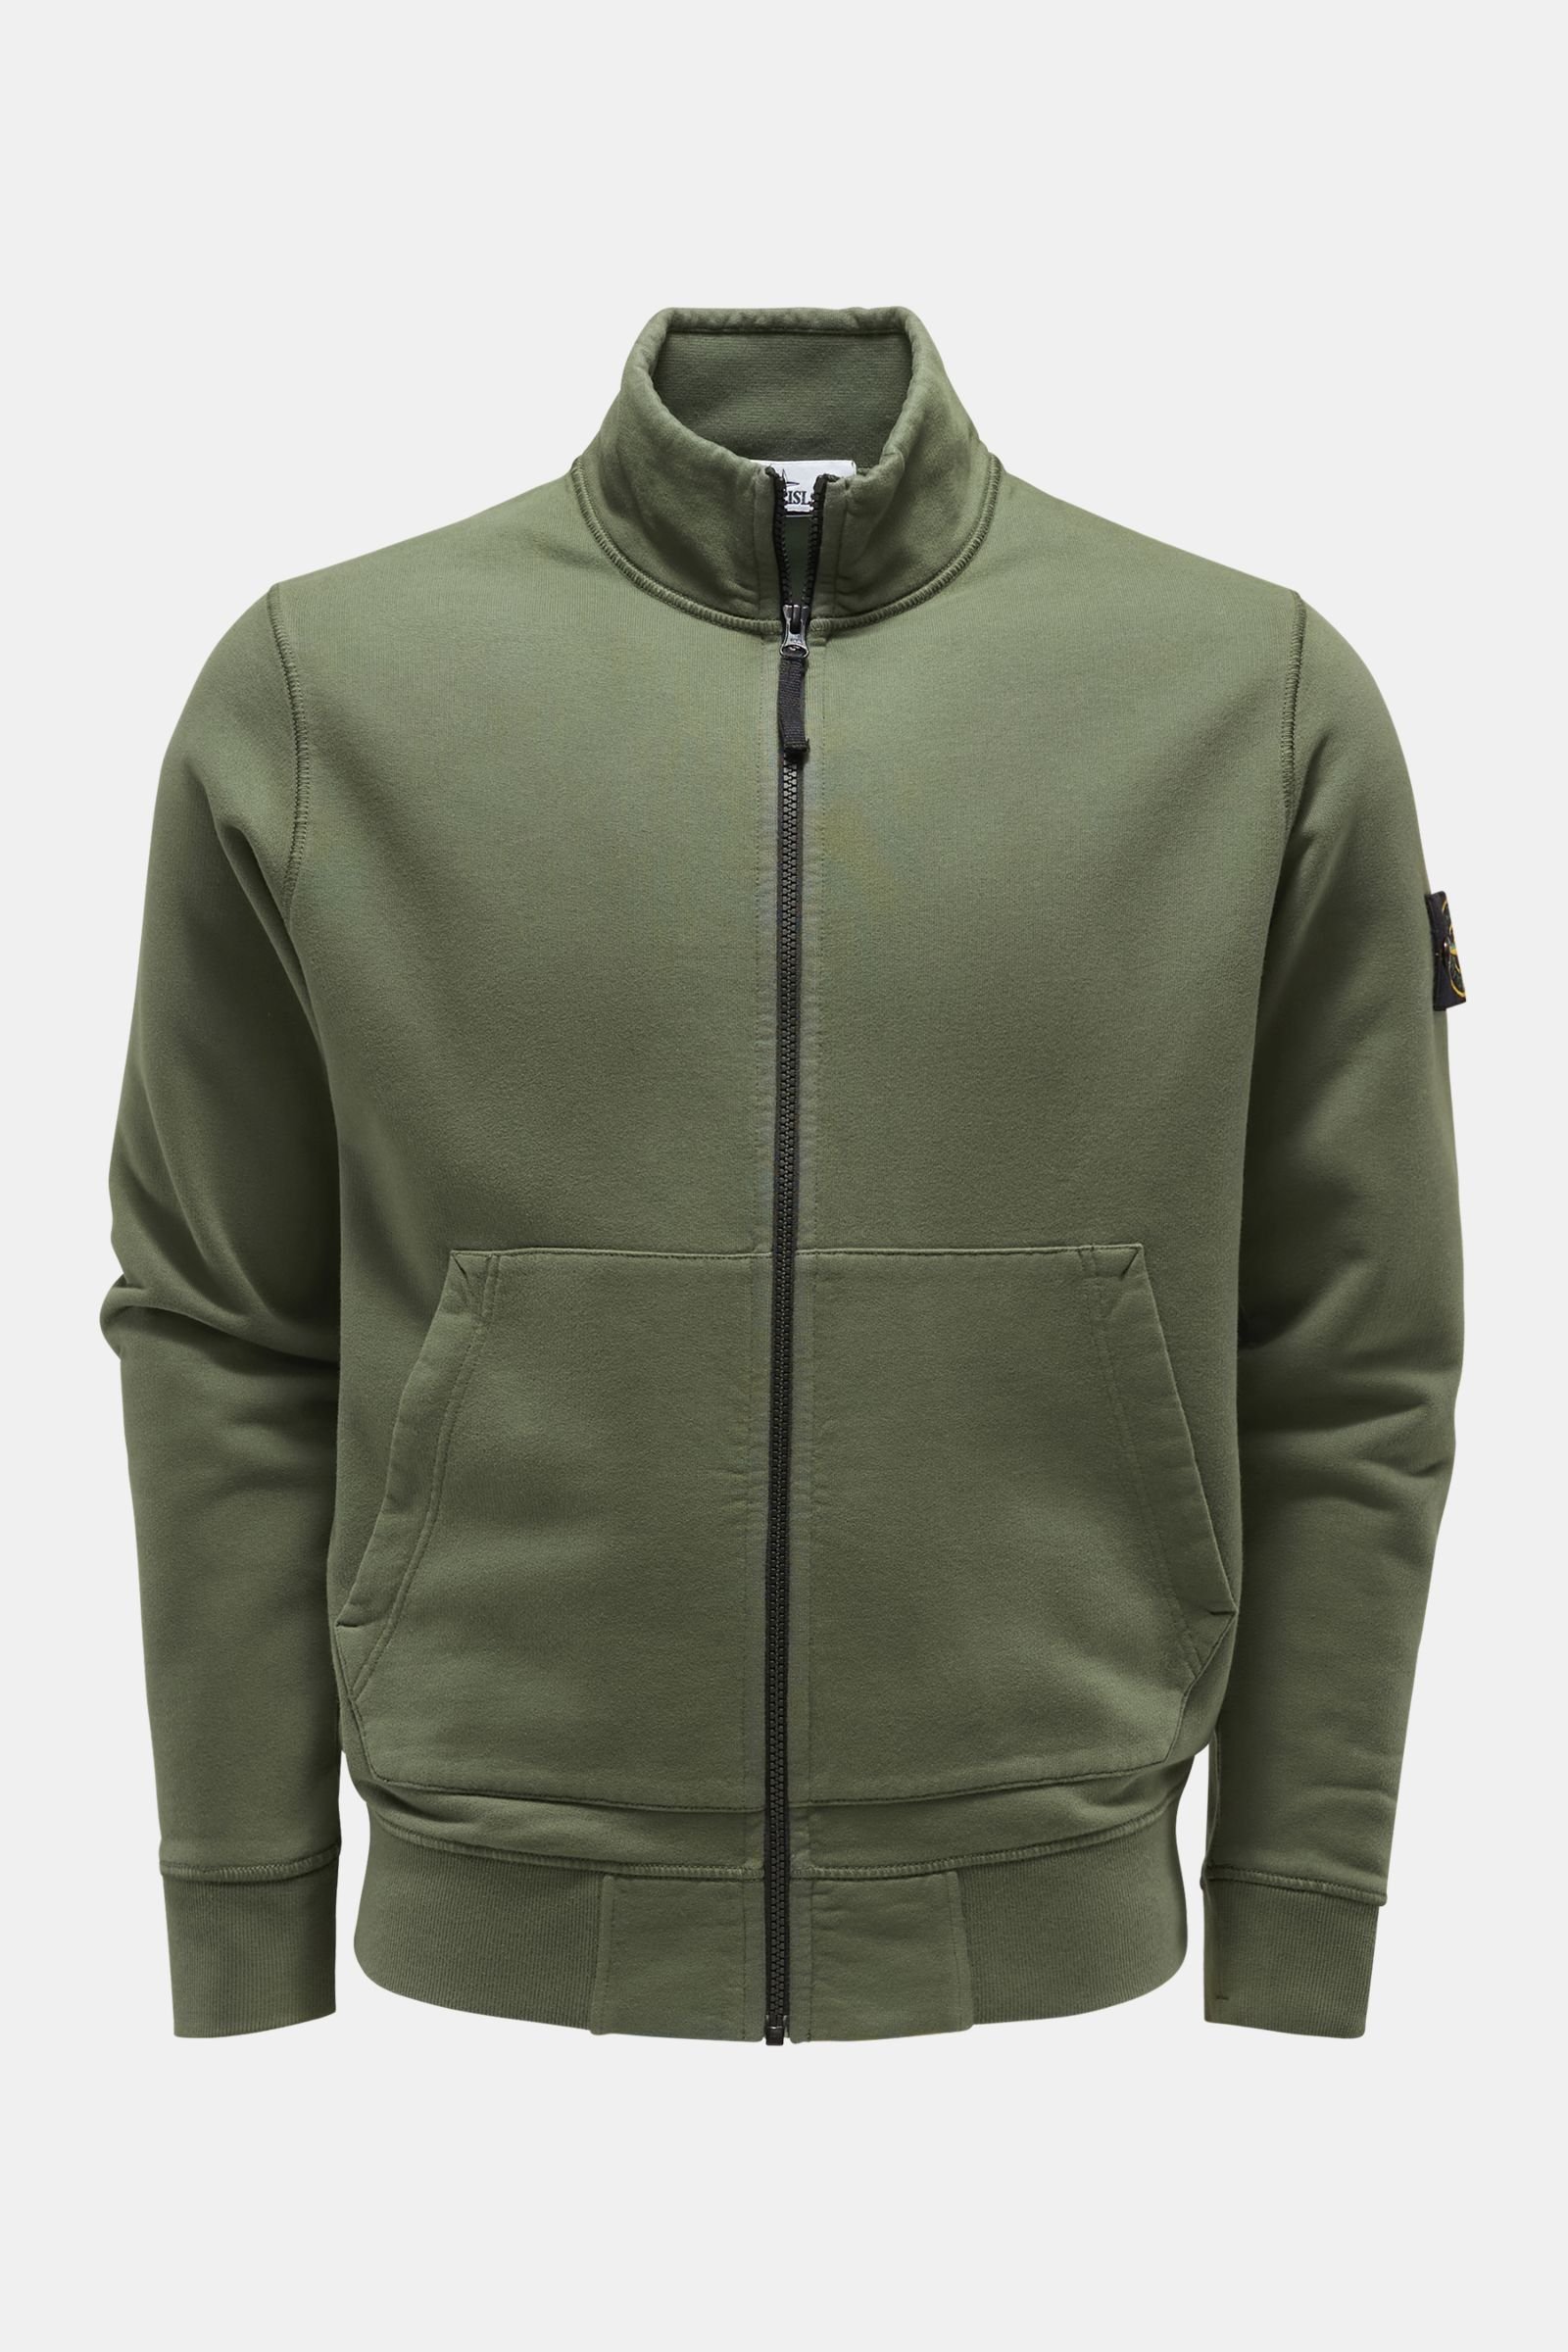 Sweat jacket grey-green